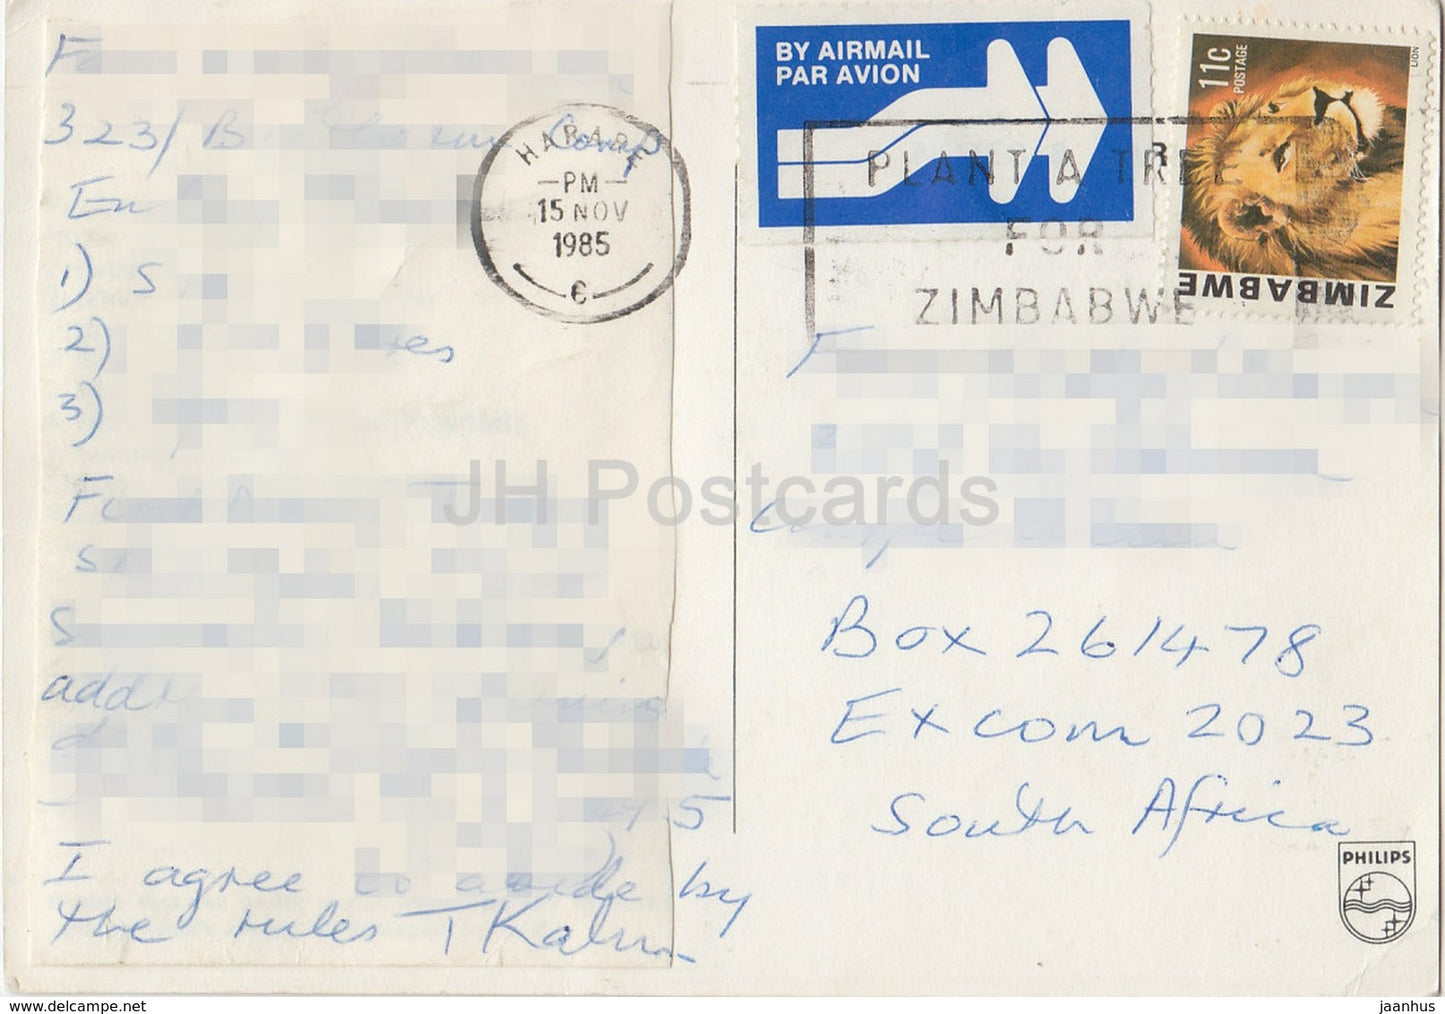 Farine - ananas - poire - raisin - Philips - 1985 - Zimbabwe - occasion